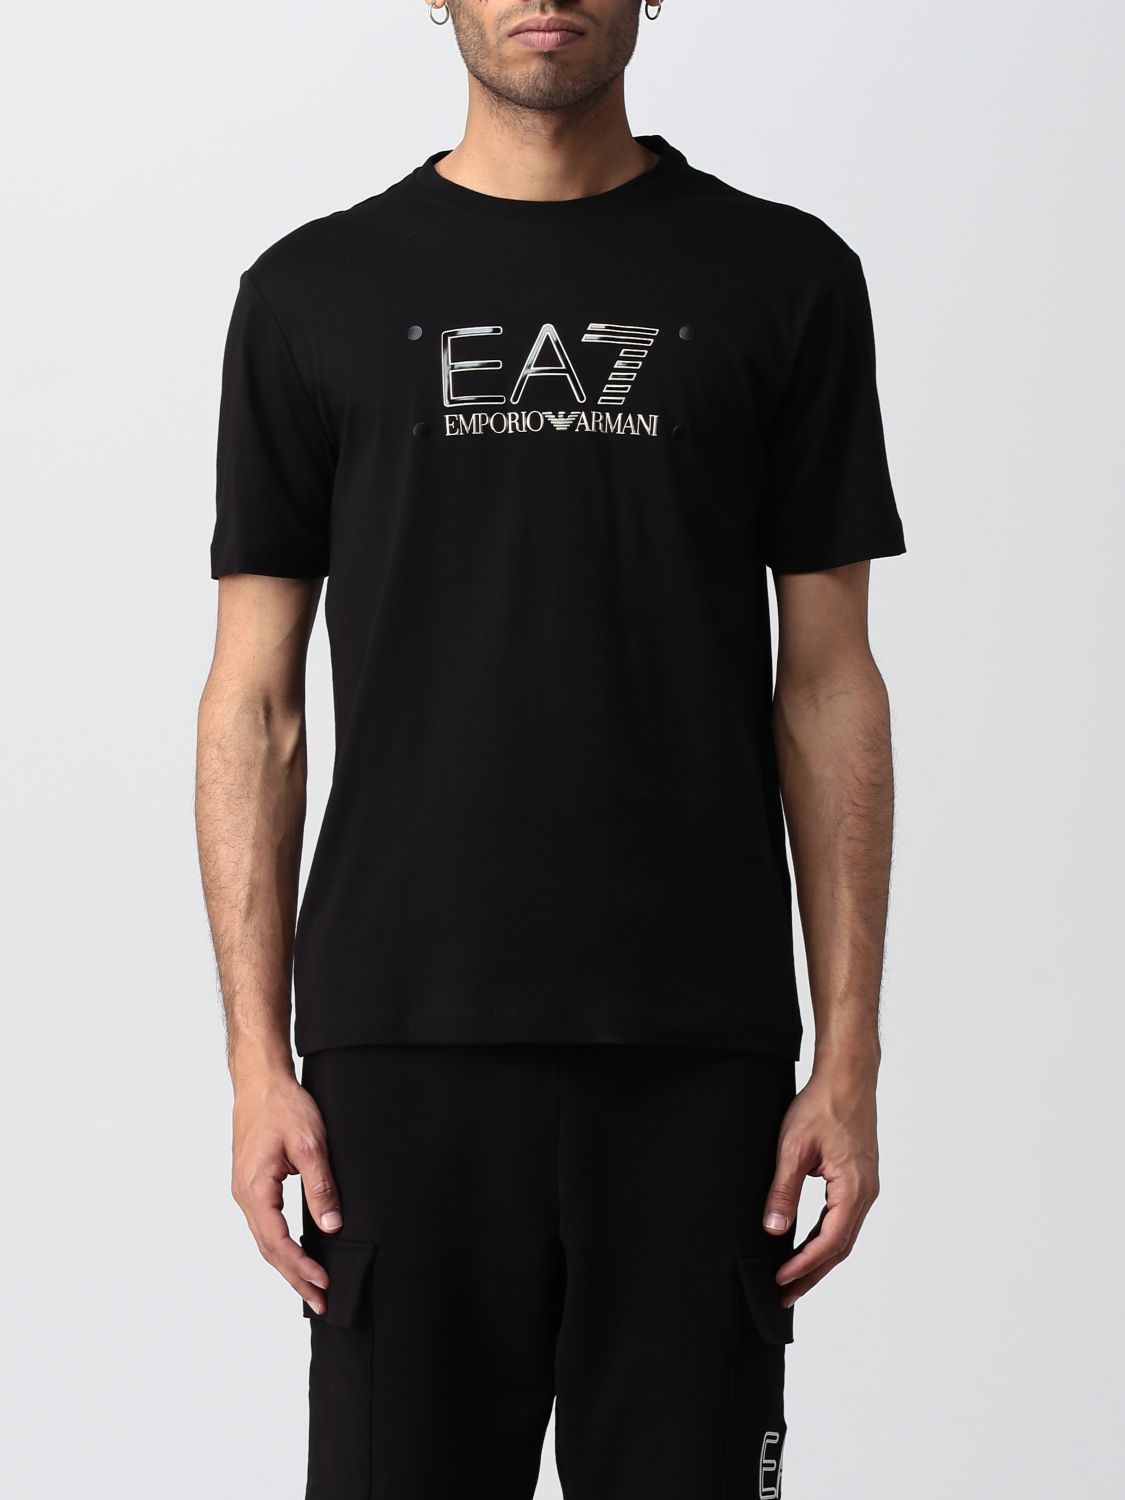 Ea7 T-shirt In Black